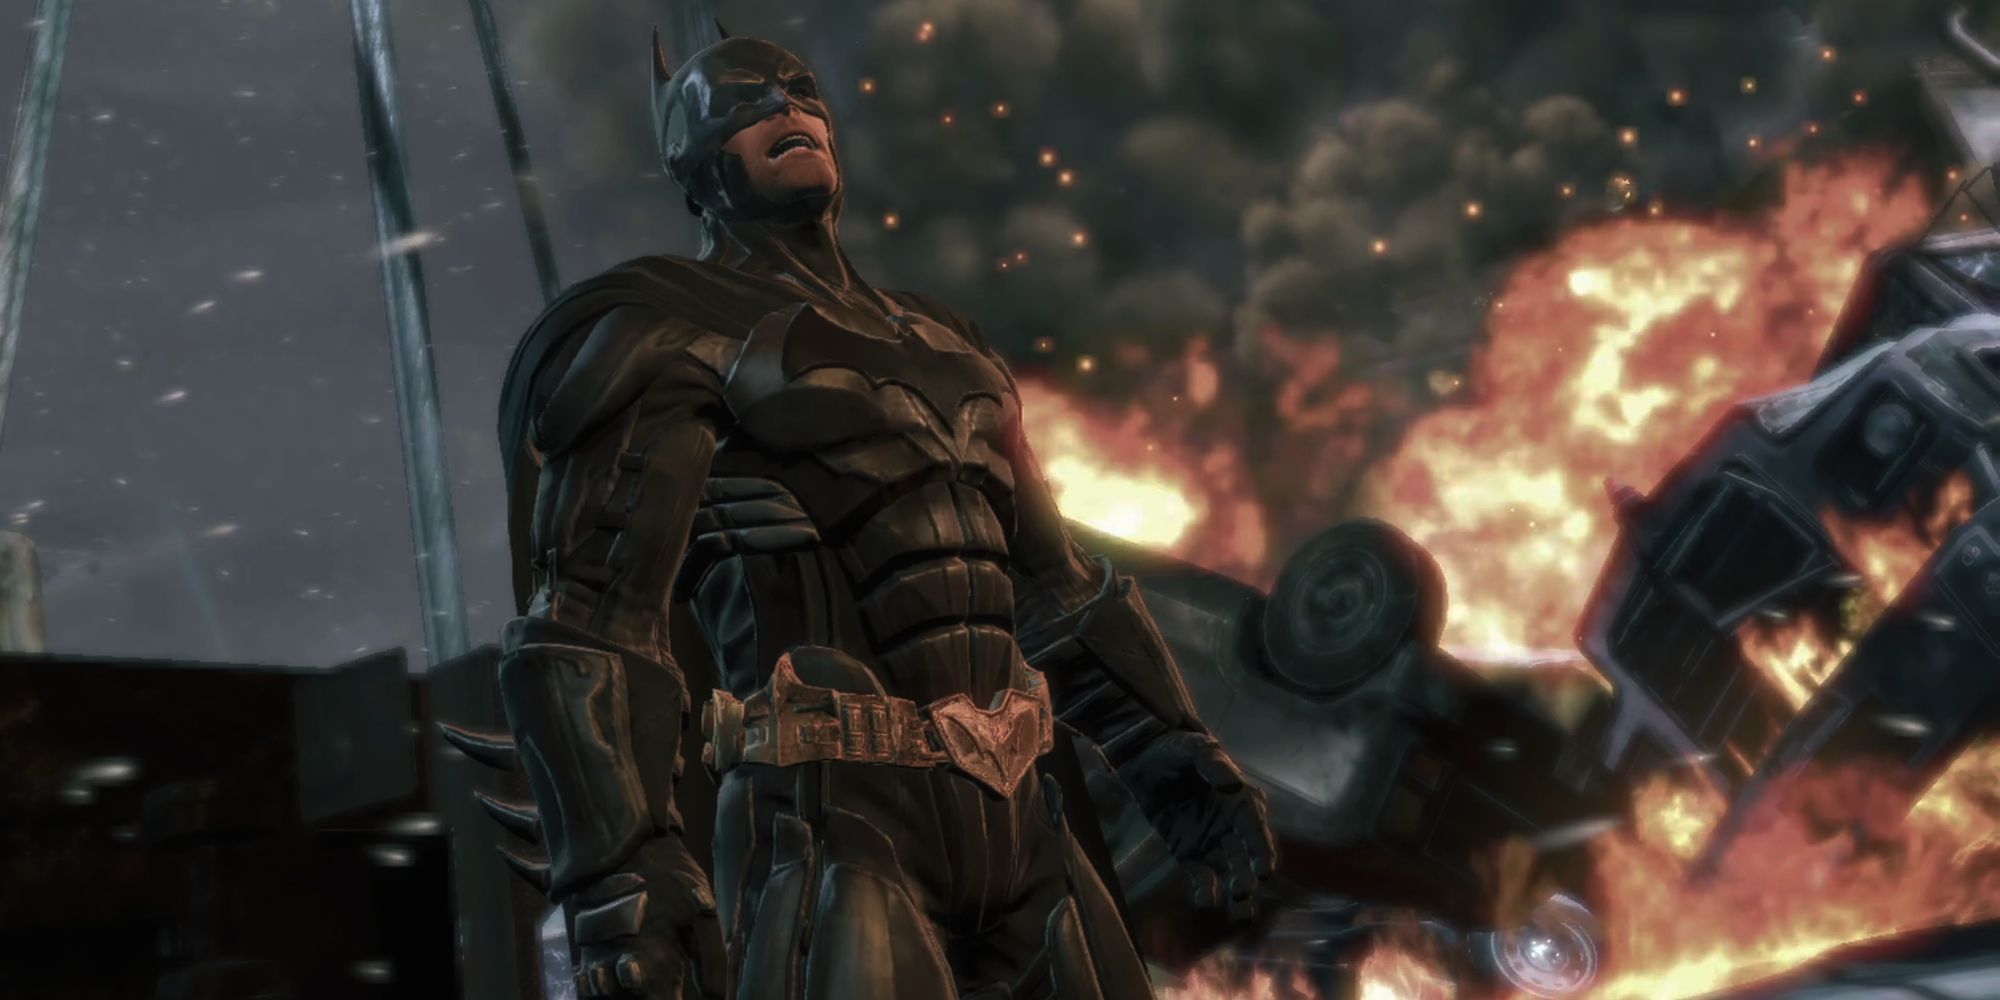 Batman in his Injustice skin confronting Firefly in Batman Arkham Origins